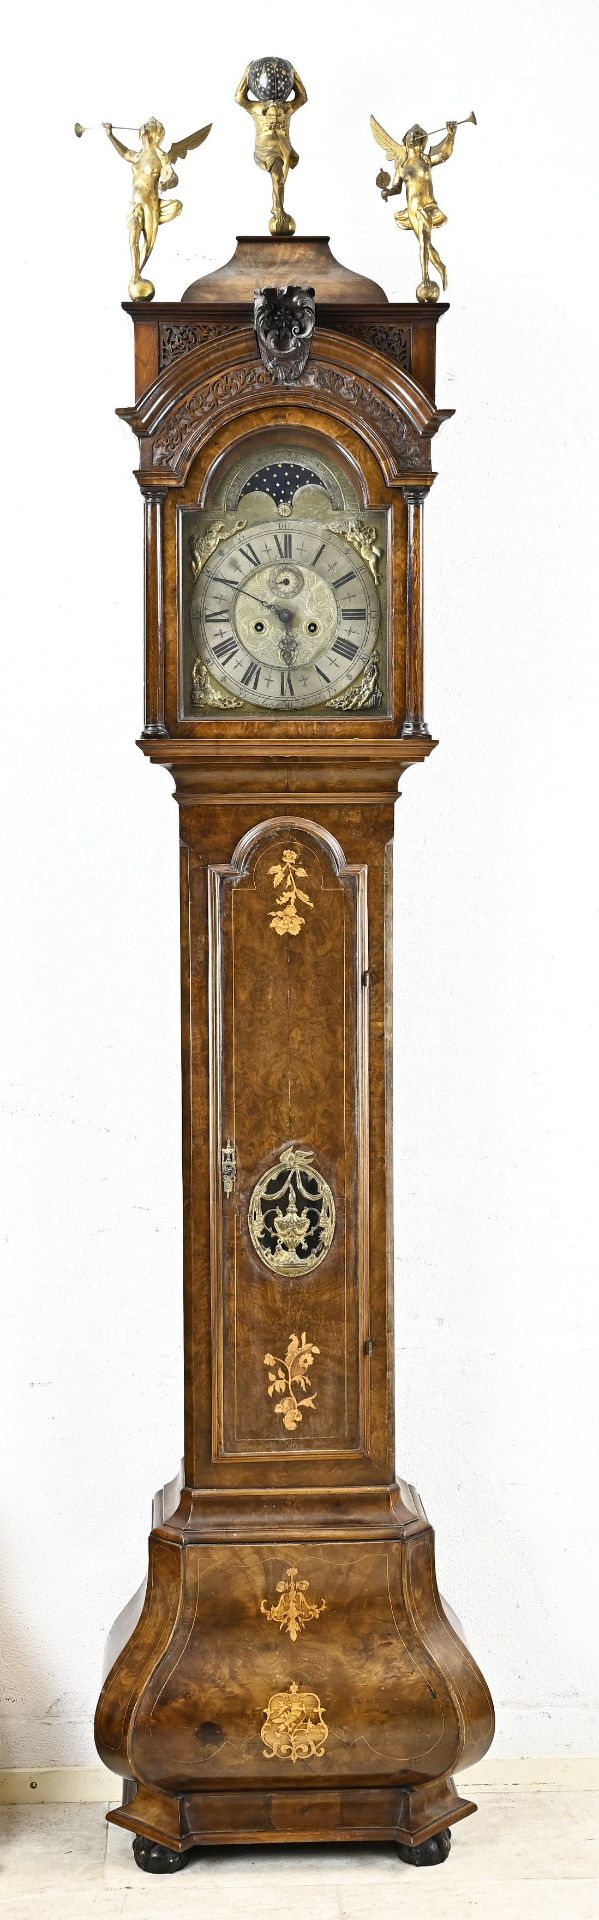 Amsterdam grandfather clock, 1740